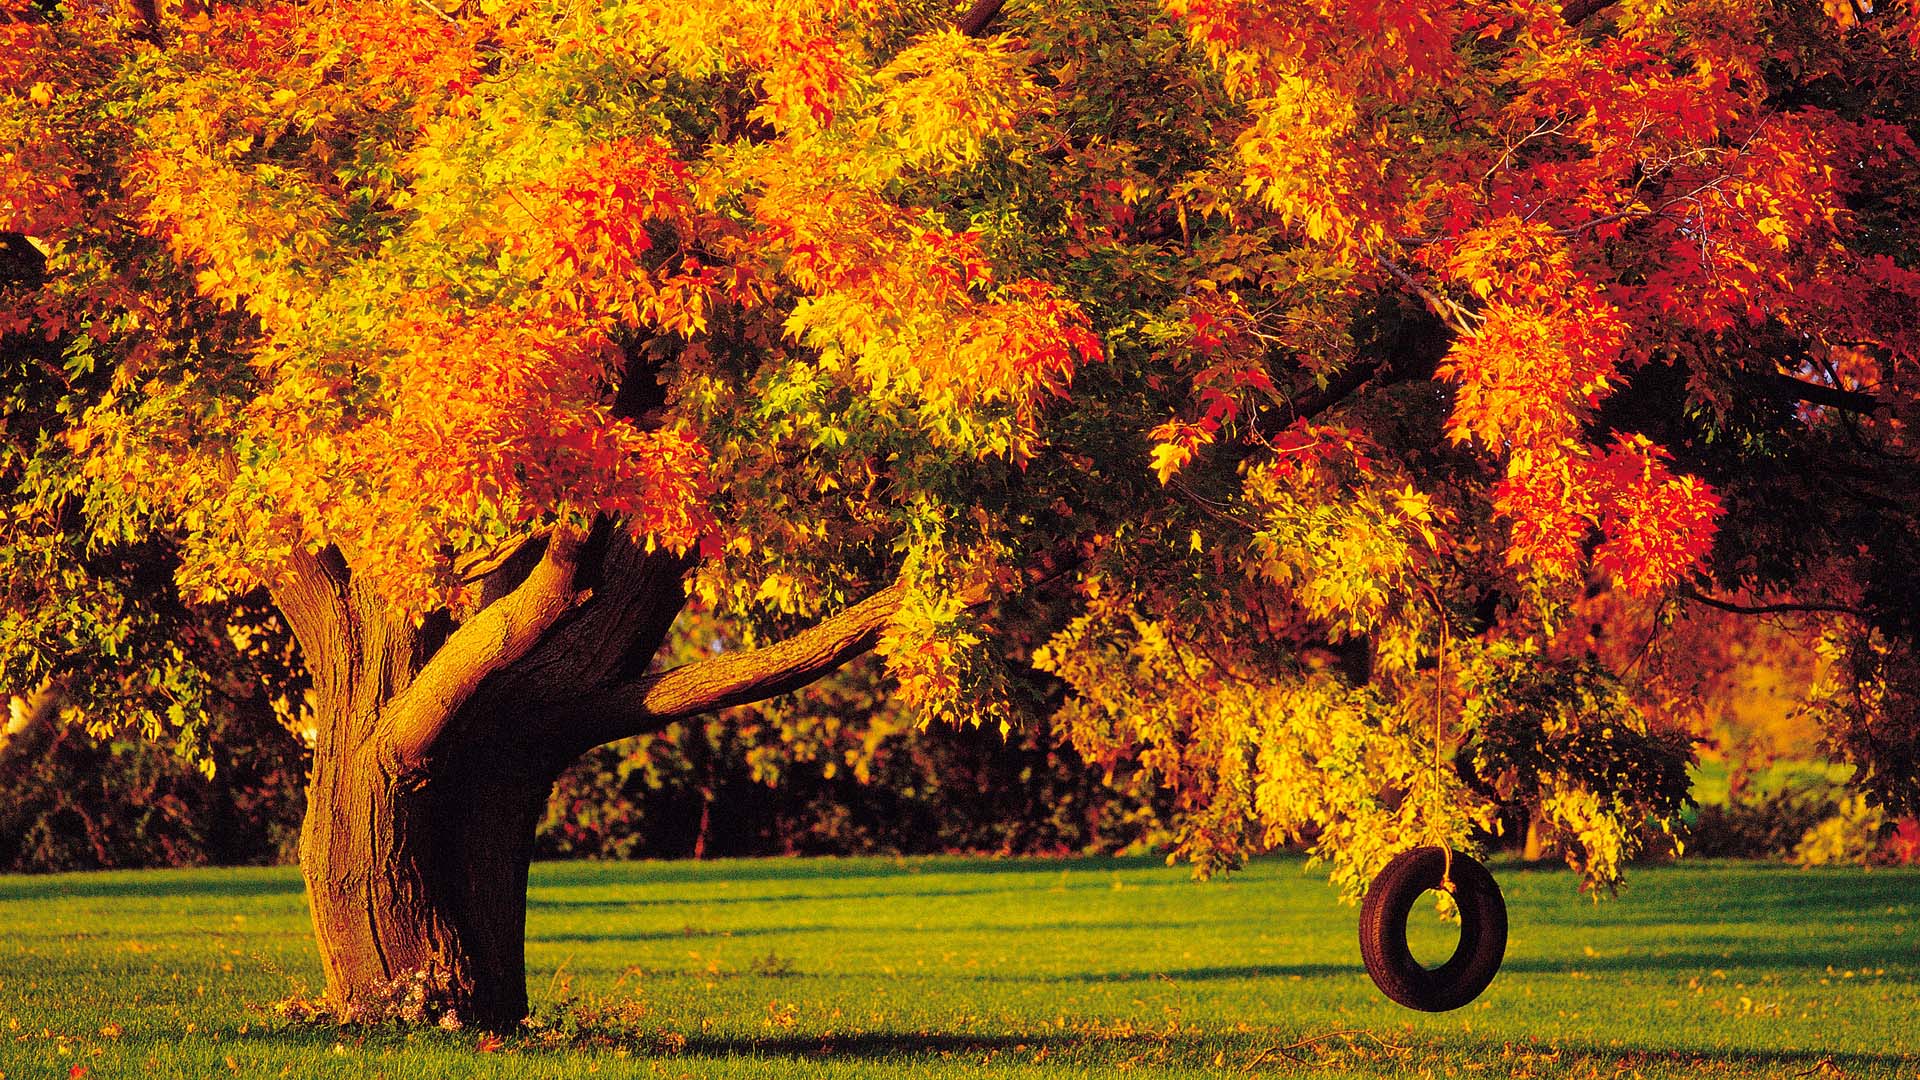 Earth Tree Fall Foliage Swing Tire 1920x1080